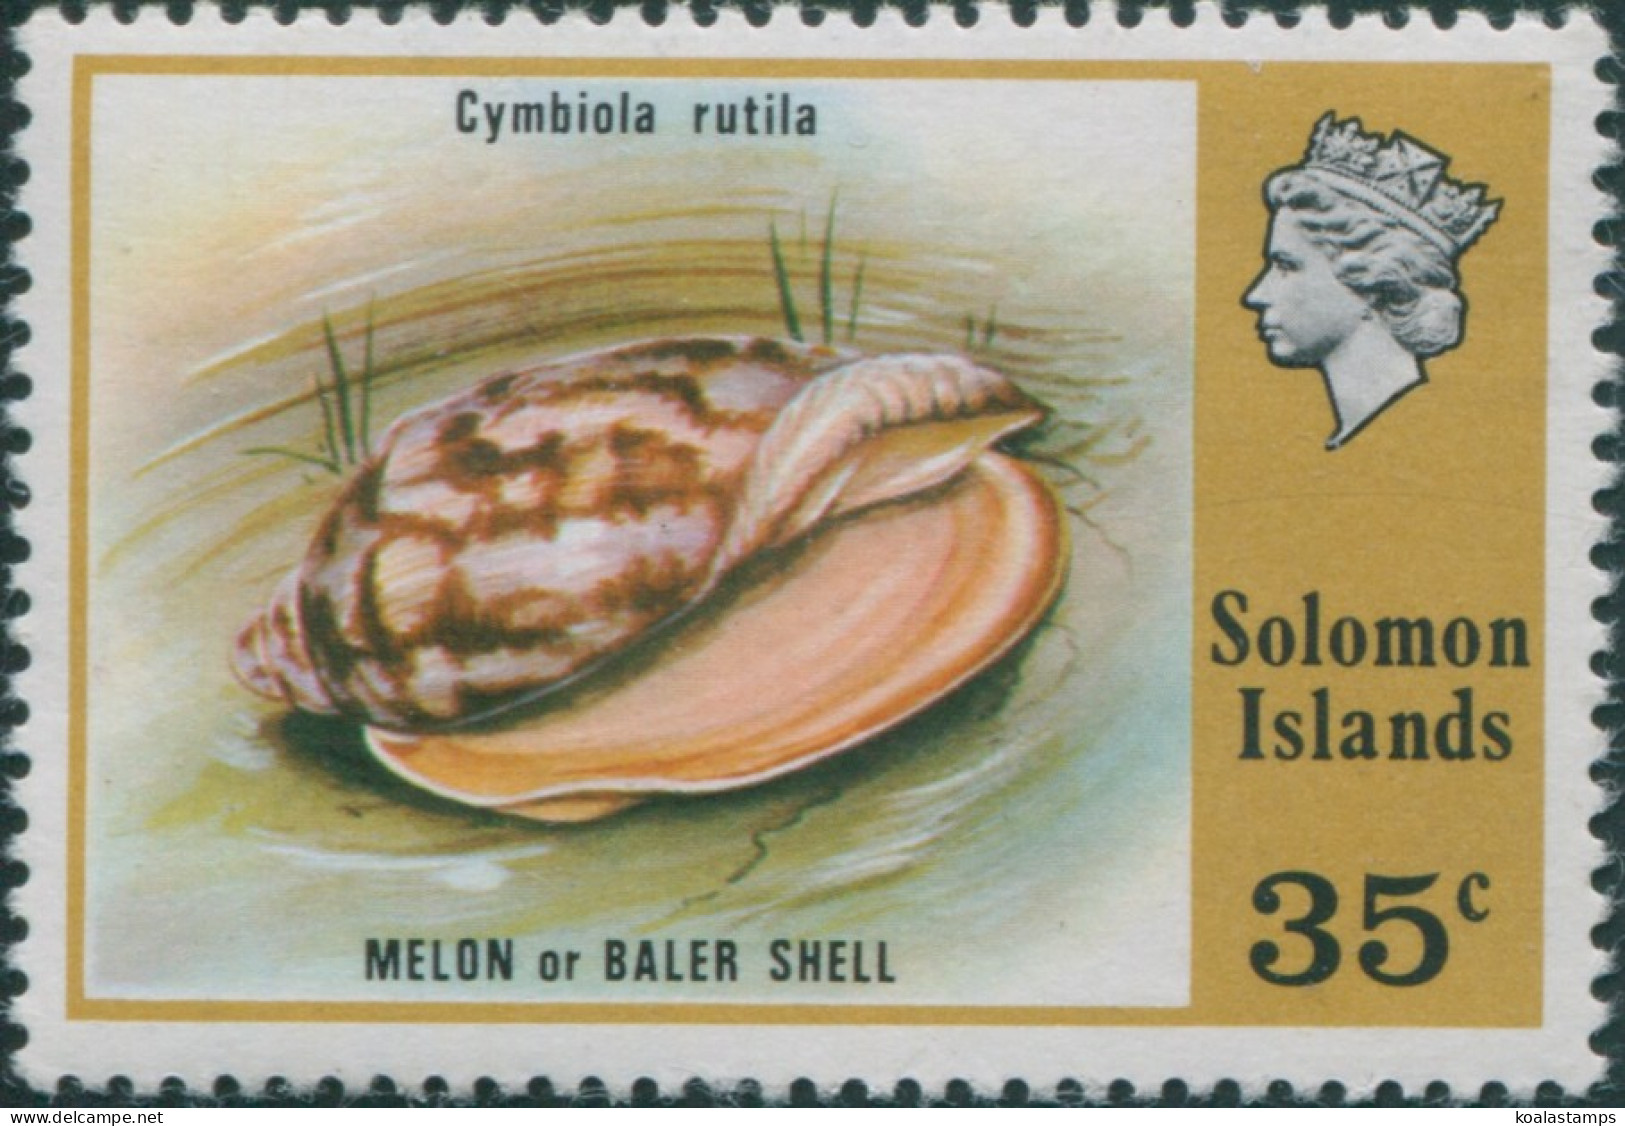 Solomon Islands 1976 SG316 35c Blood-red Volute Shell MNH - Solomon Islands (1978-...)